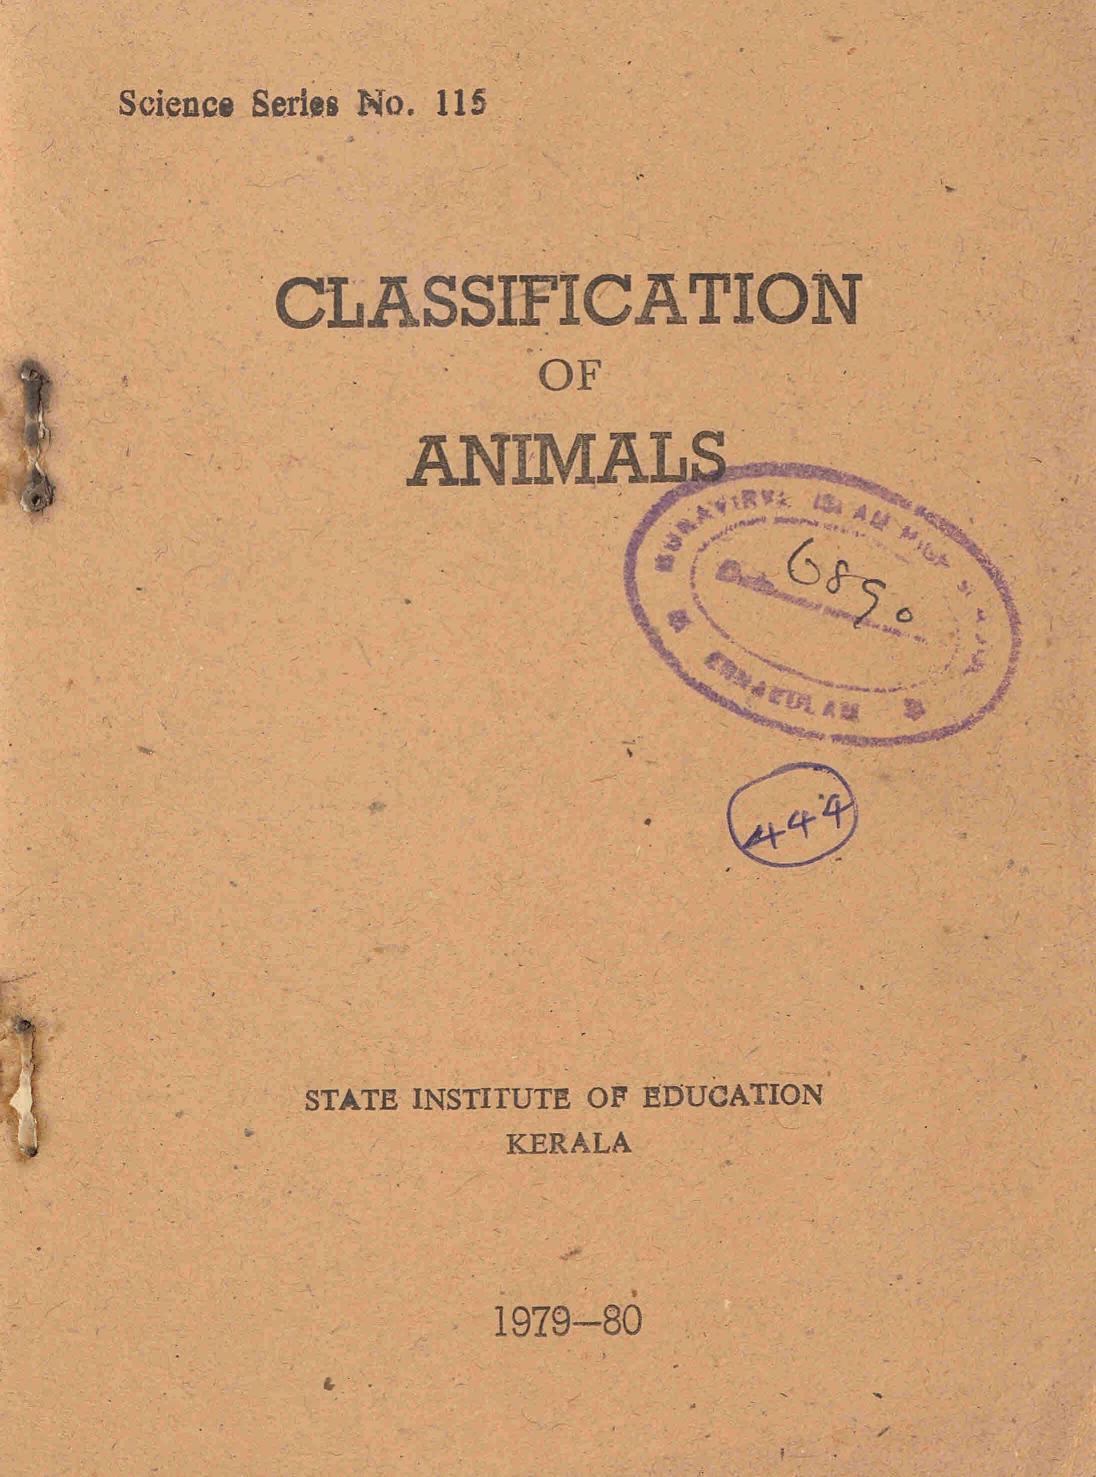  1980 - Classification of Animals